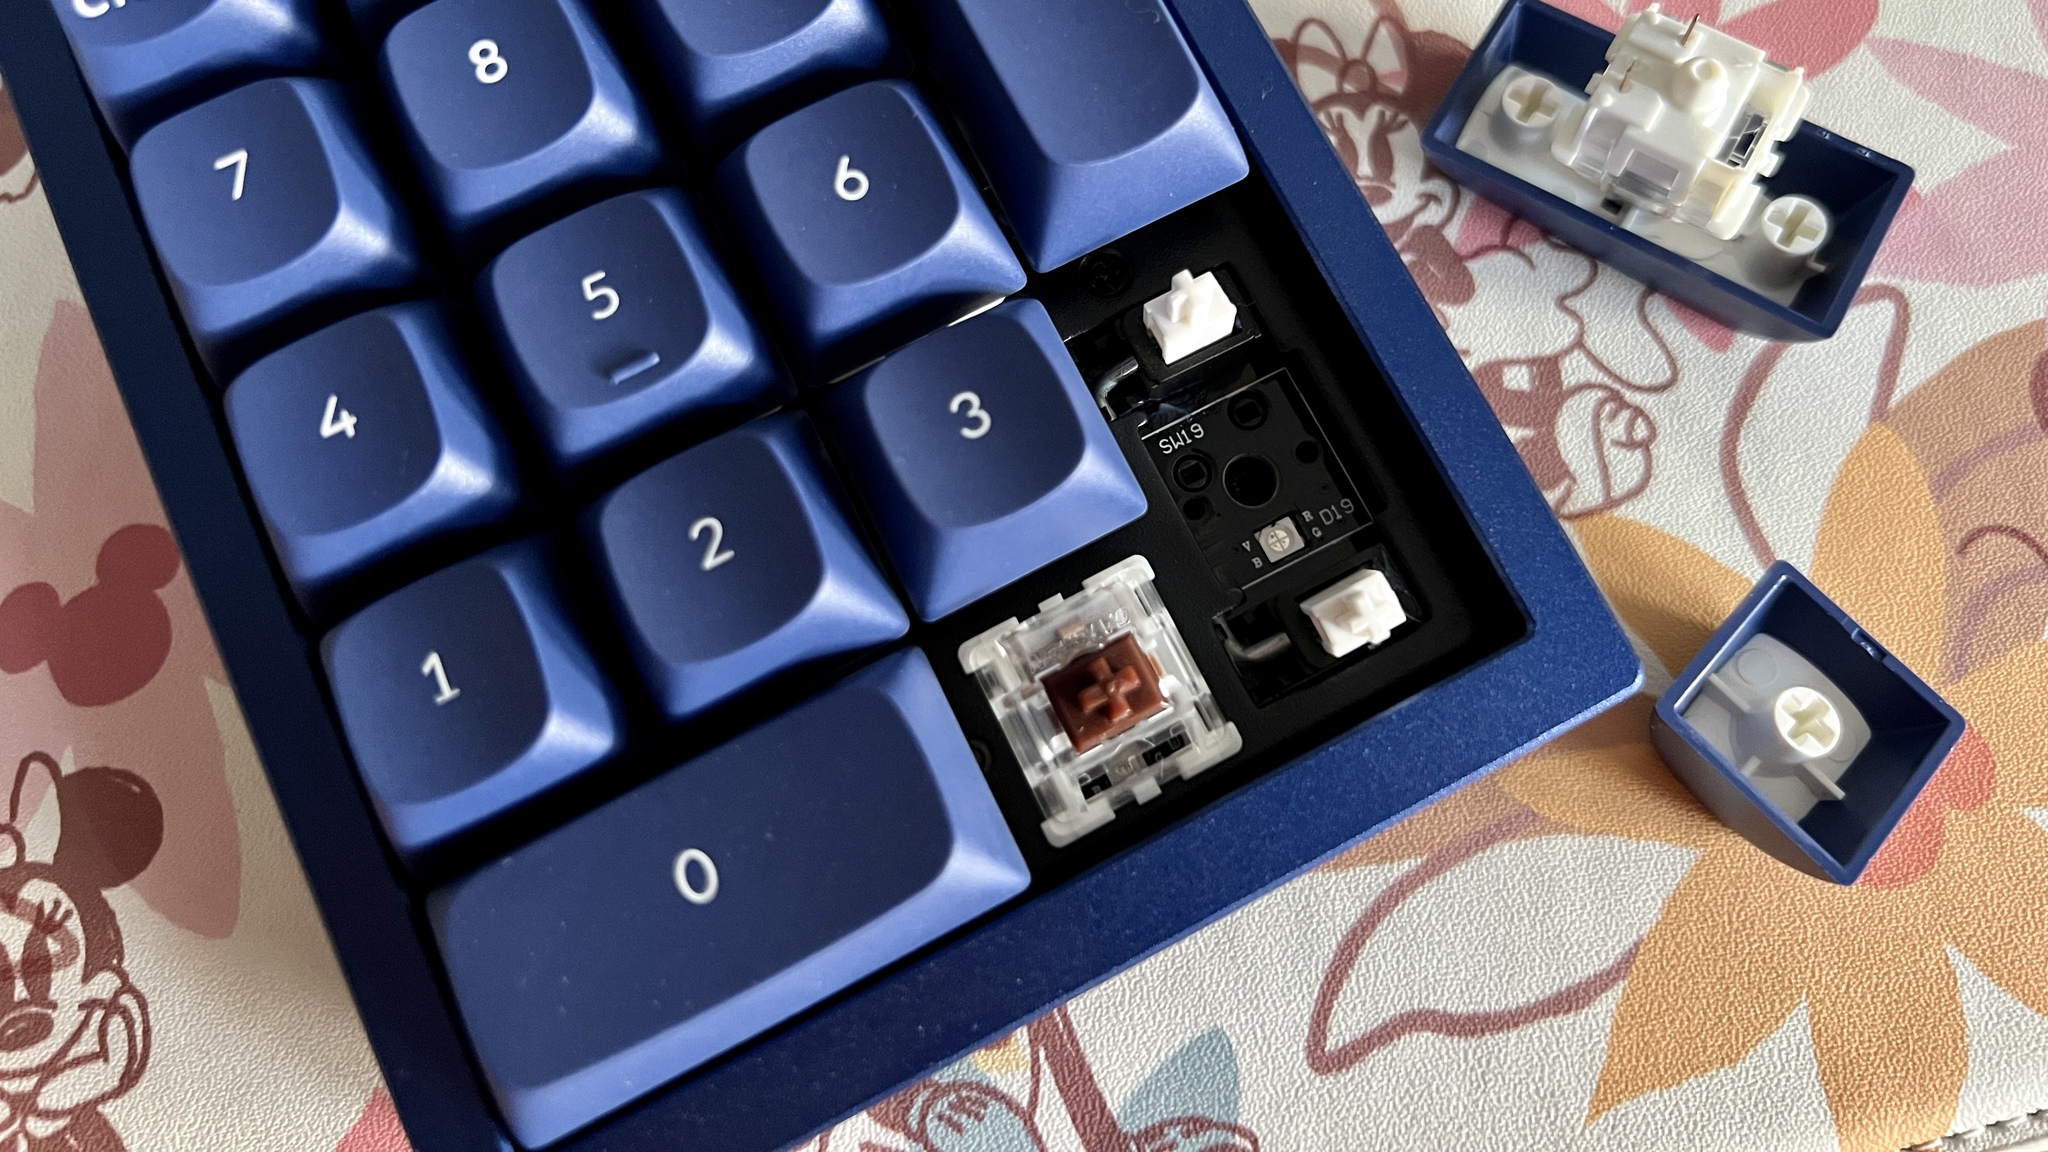 Keychron Q0 Blue Keycap Switches